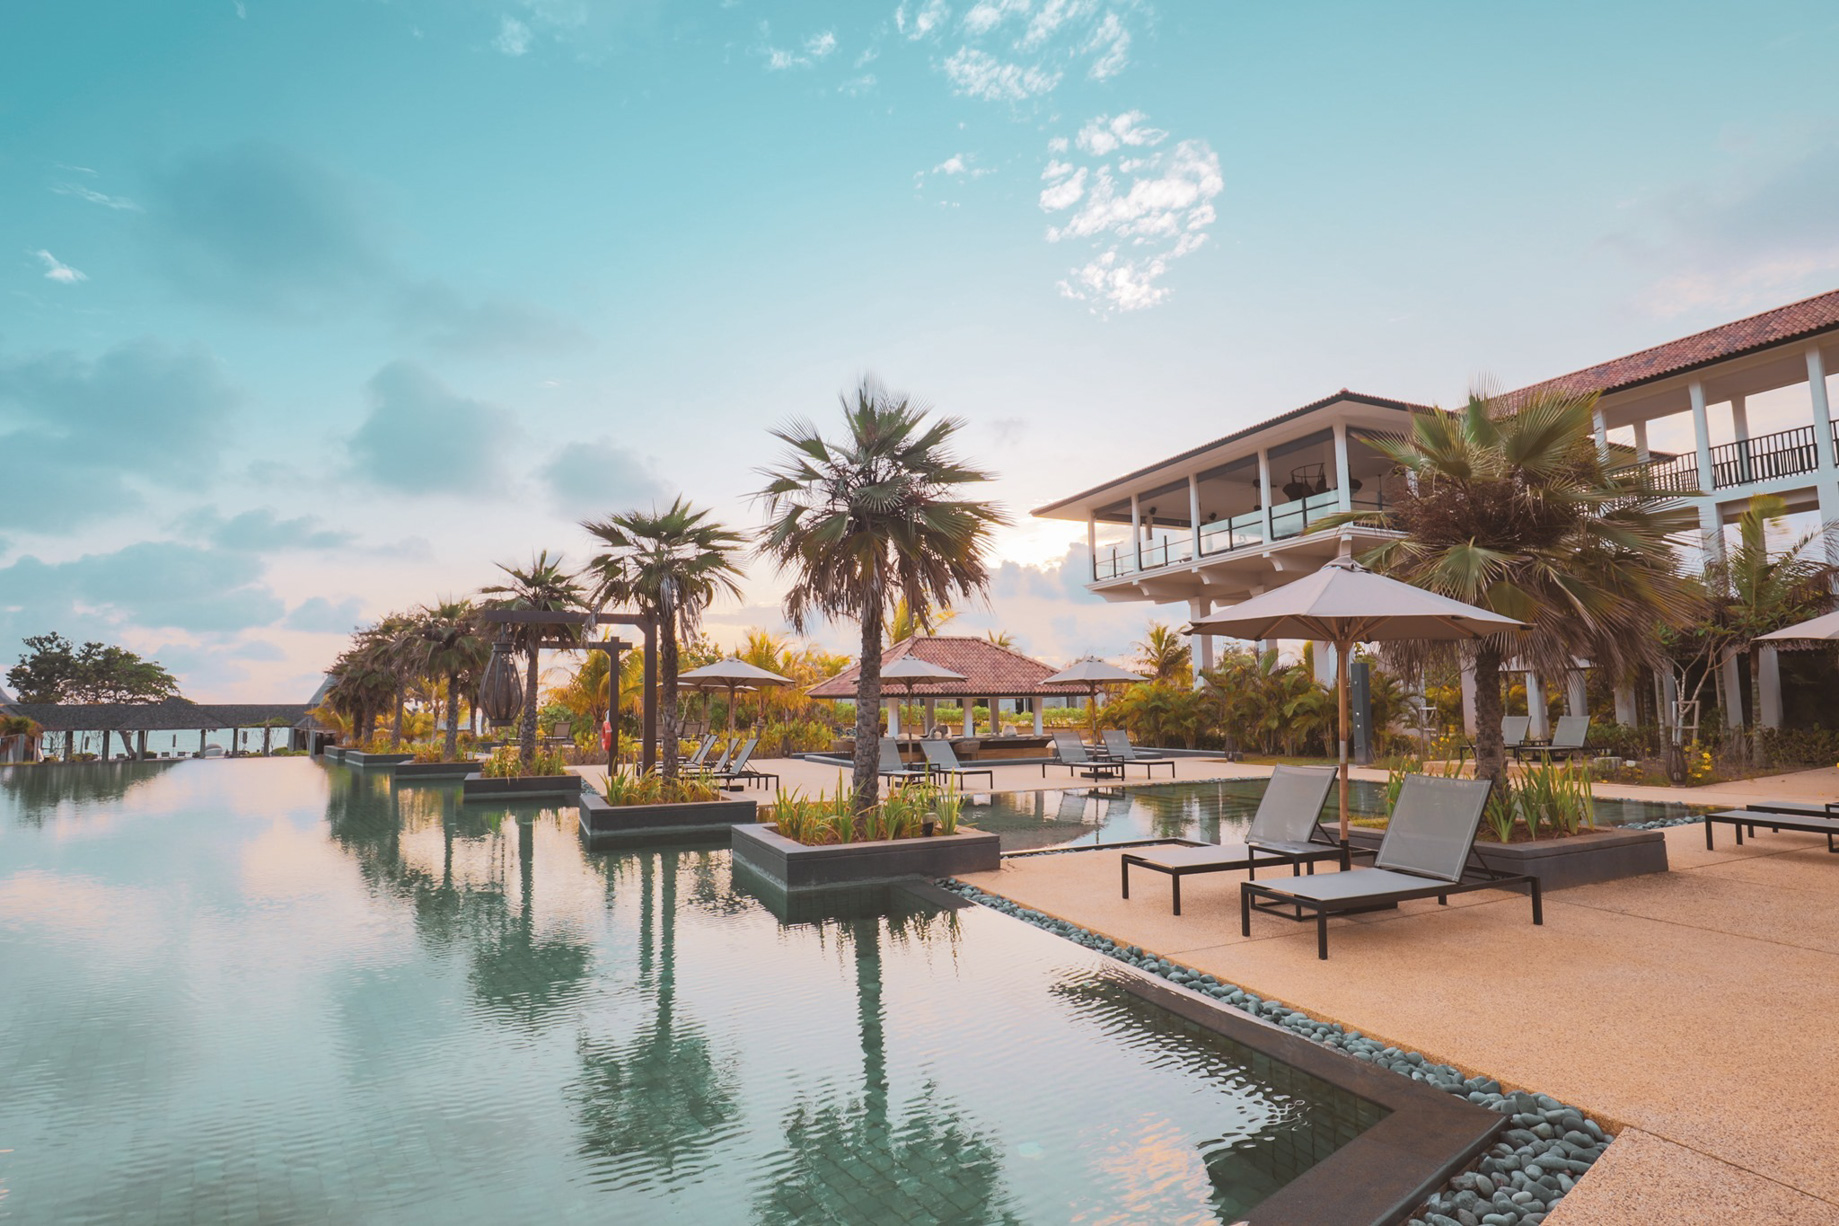 Anantara Desaru Coast Resort & Villas – Johor, Malaysia – Exterior Pool View